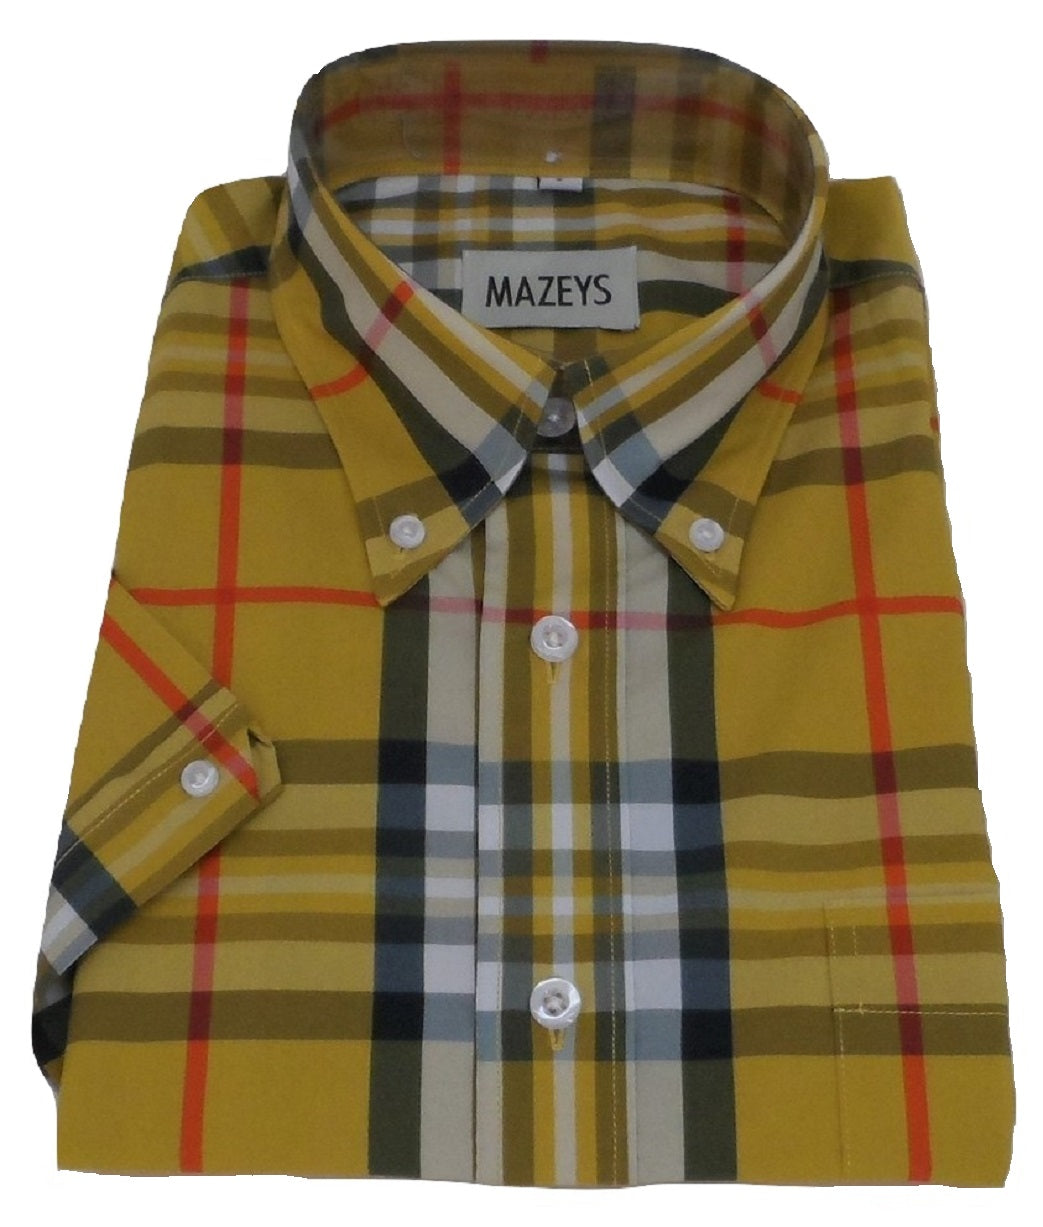 Mazeys Mens Mustard Checked 100% Cotton Short Sleeved Shirts